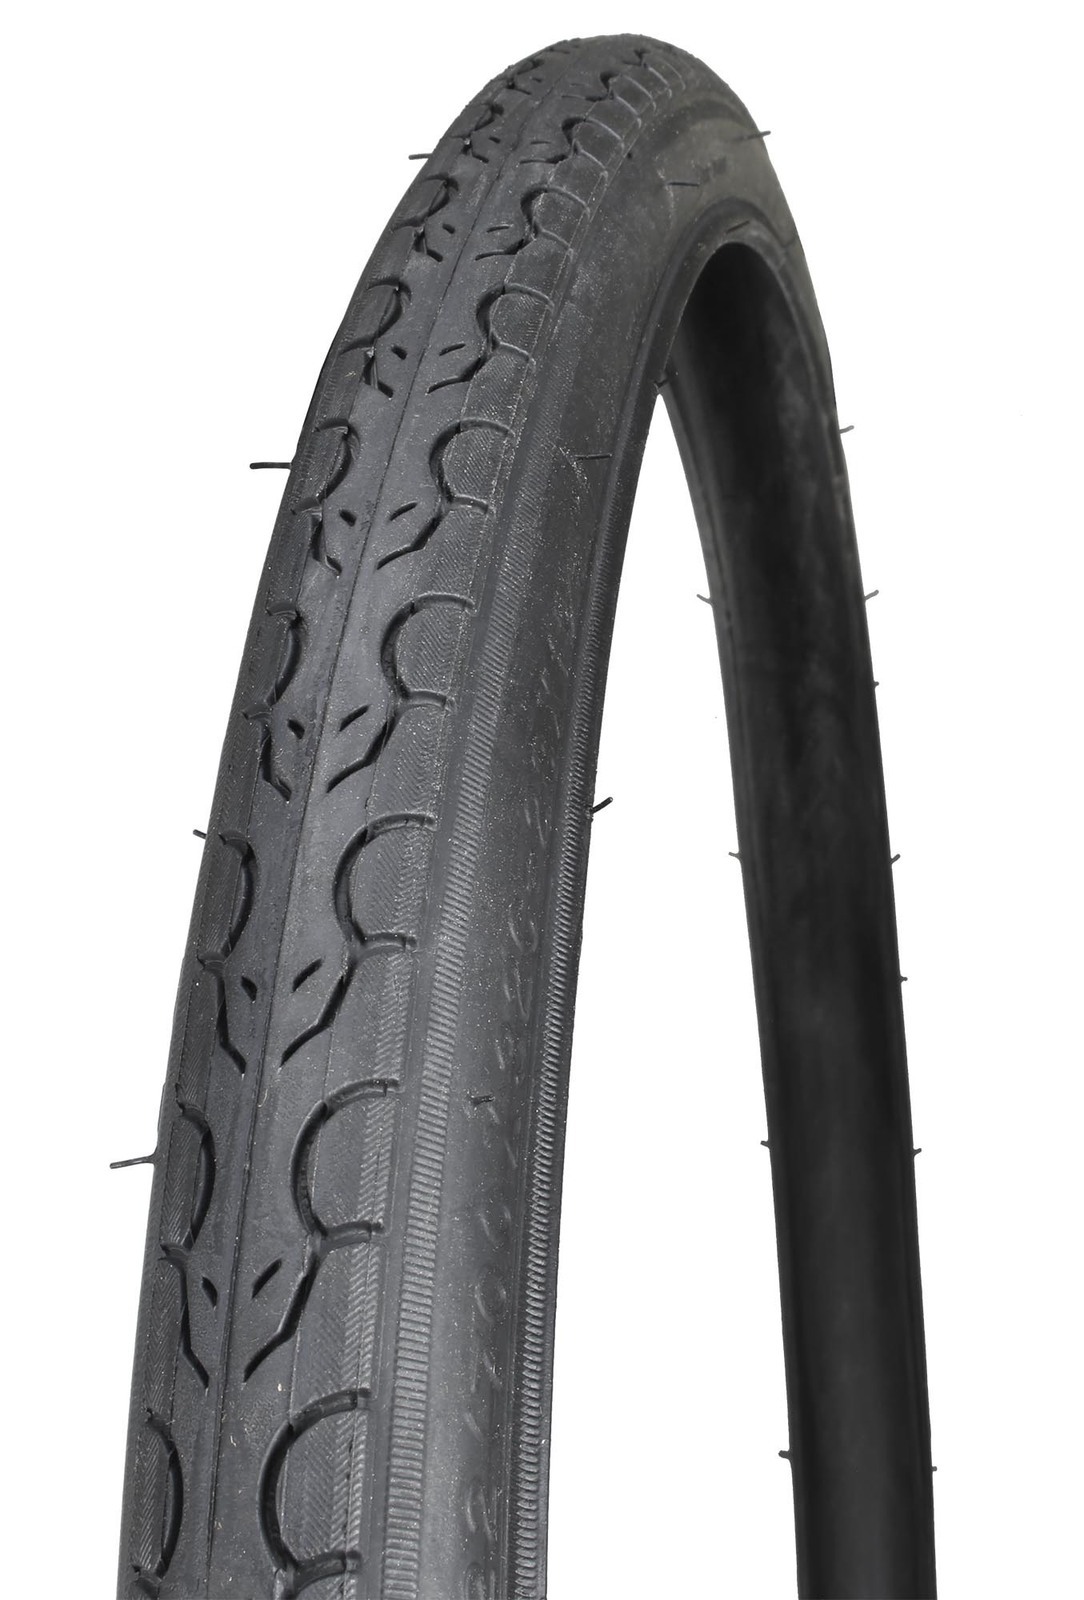 32c bike tires